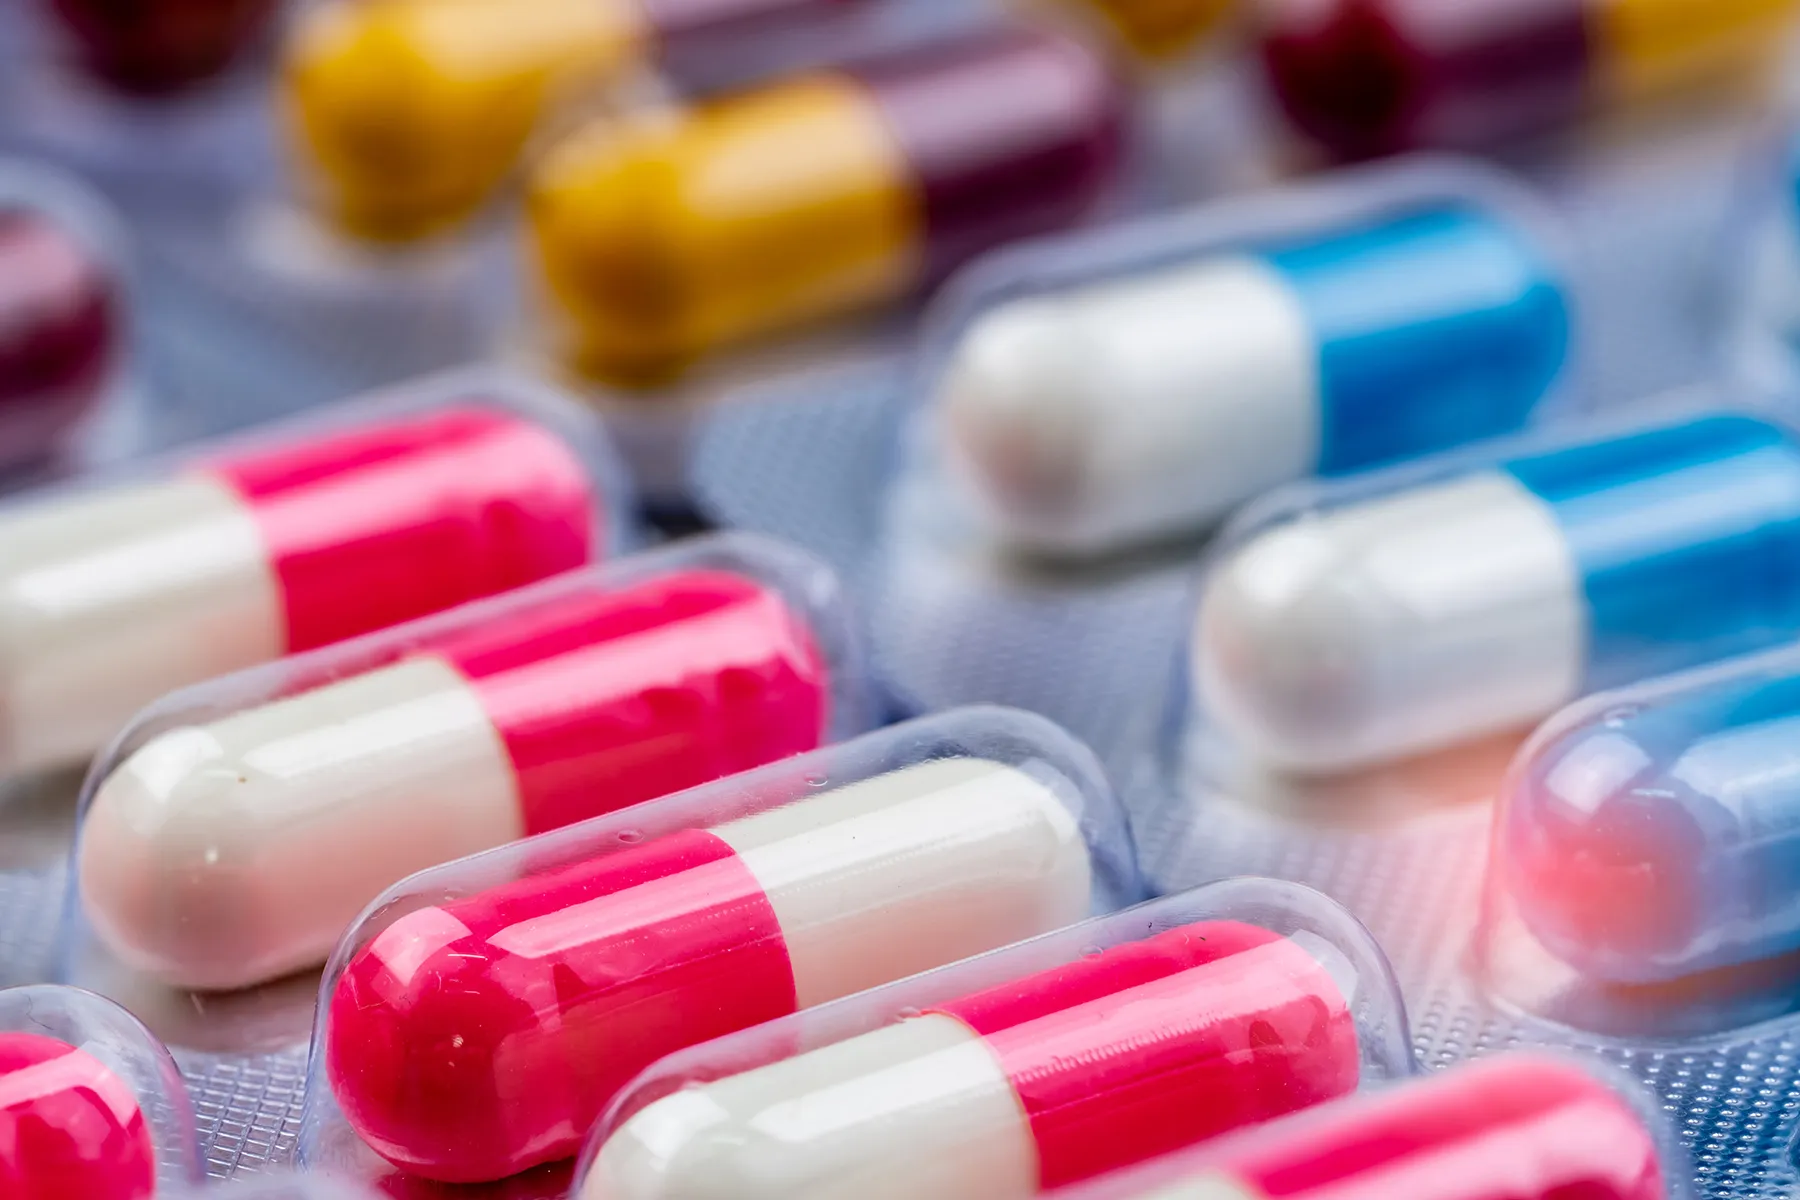 Black, Senior Patients More Likely to Get Unneeded Antibiotics